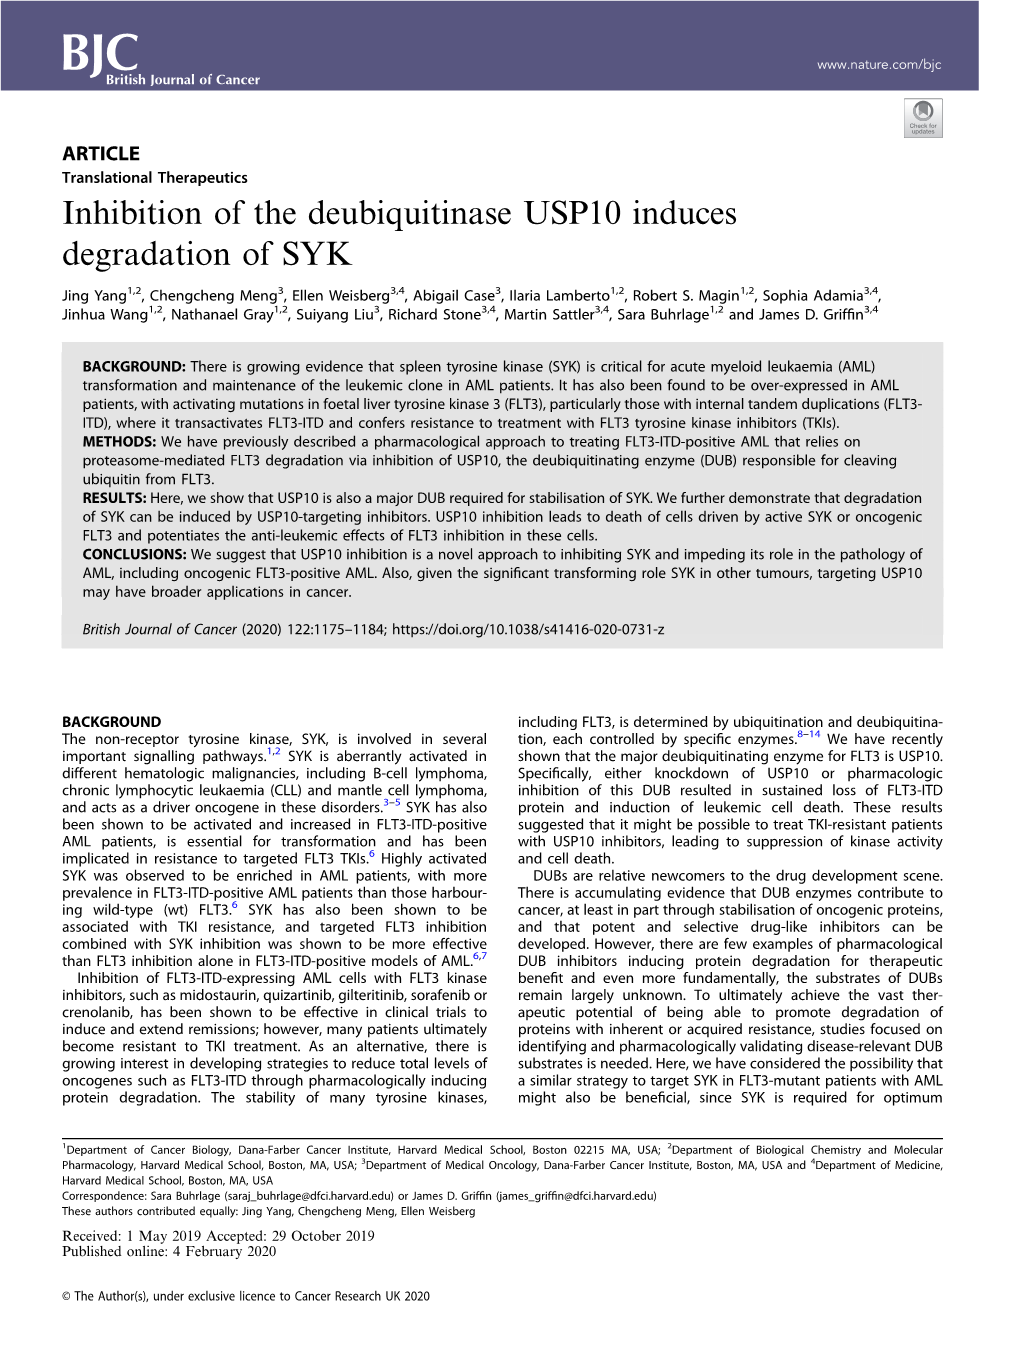 Inhibition of the Deubiquitinase USP10 Induces Degradation of SYK